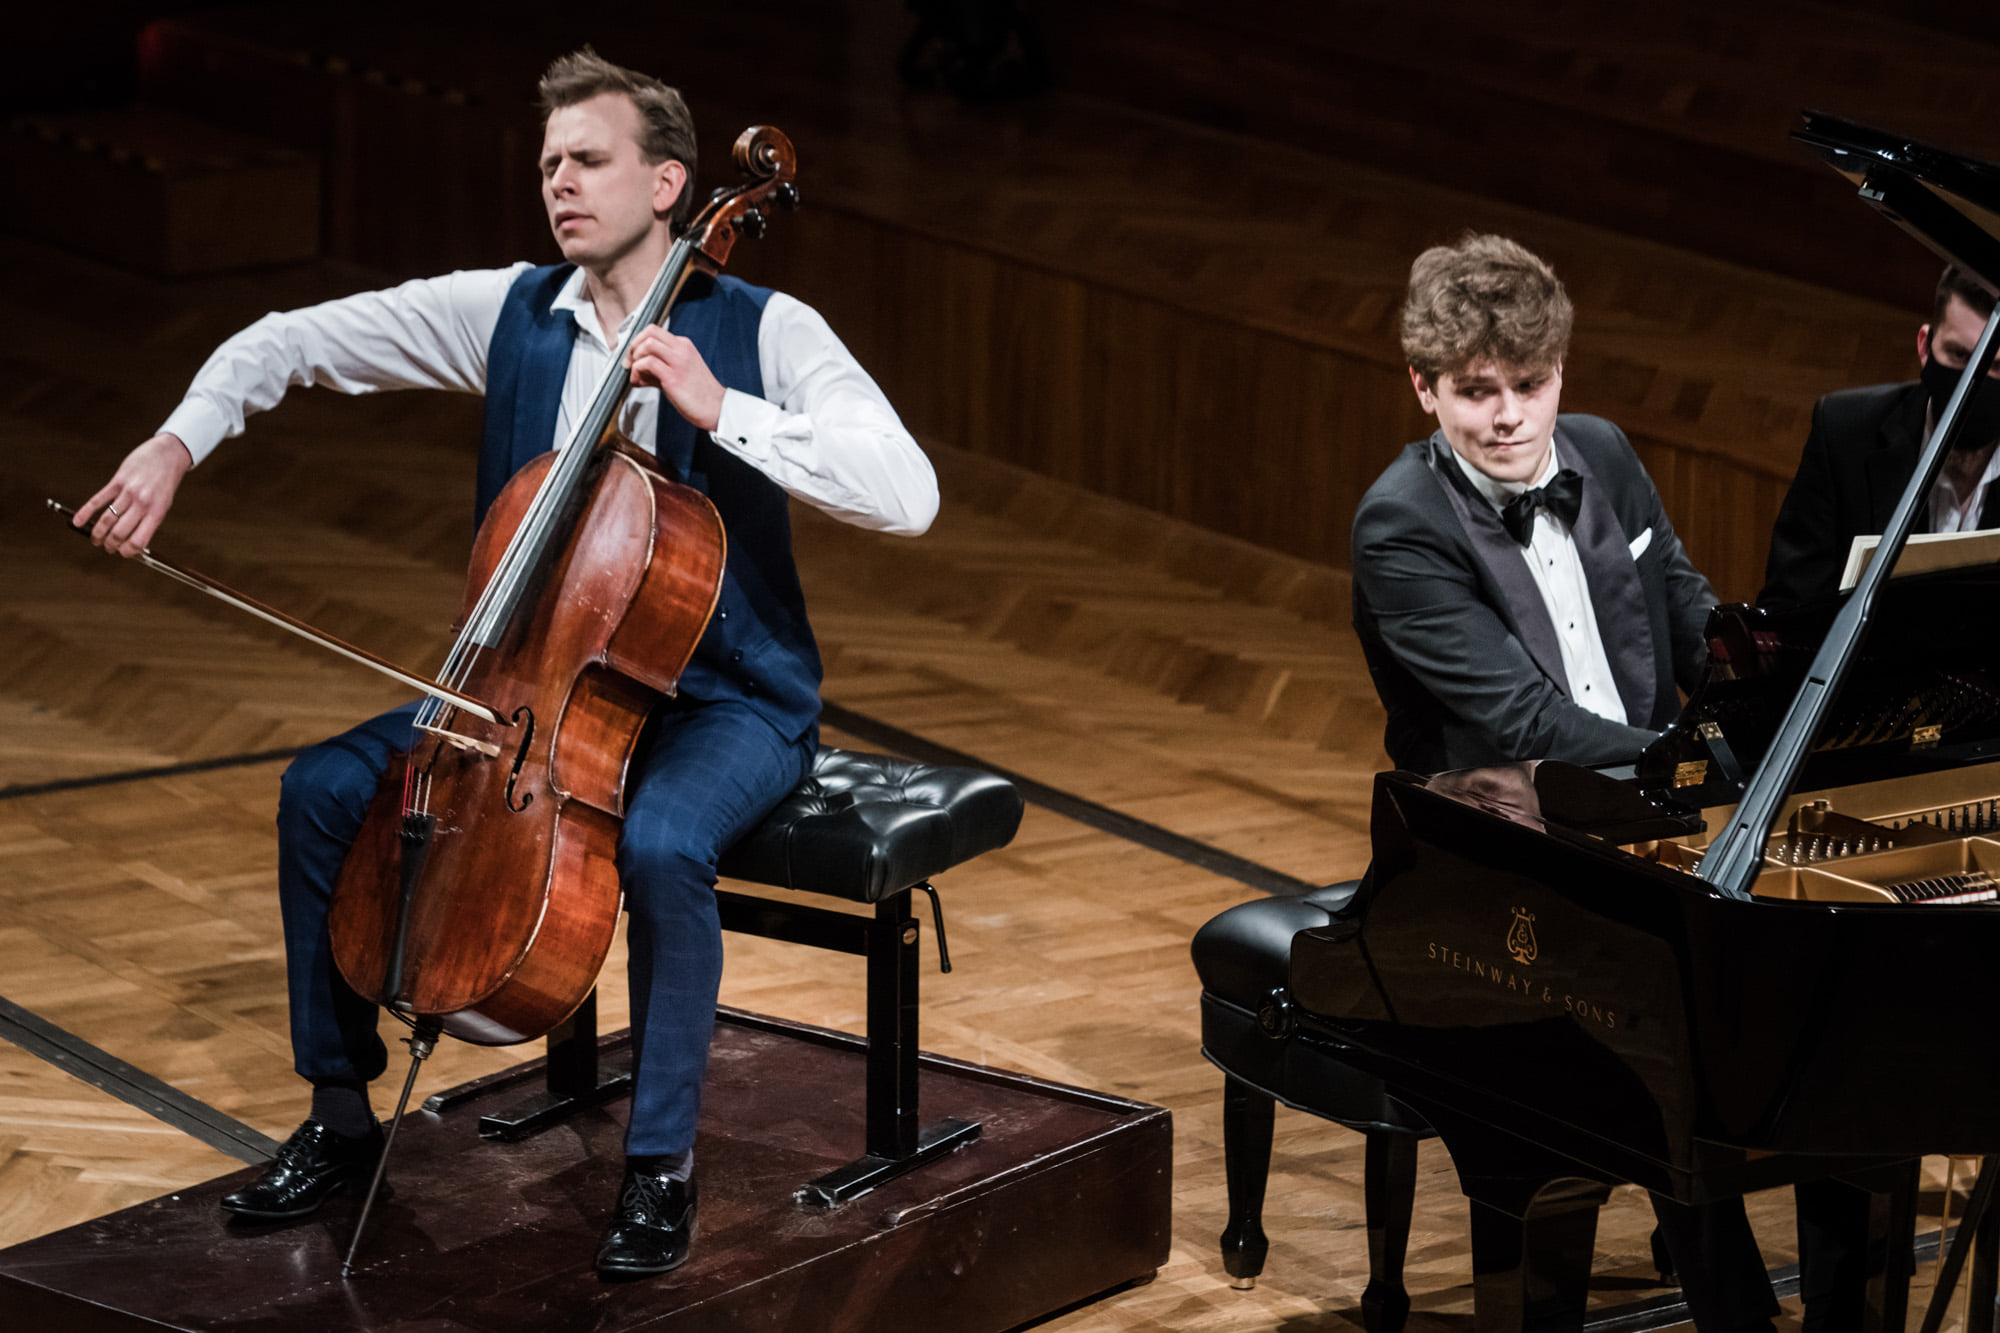 Pianist Szymon Nehring Wins Prestigious Arthur Rubinstein Award, Article